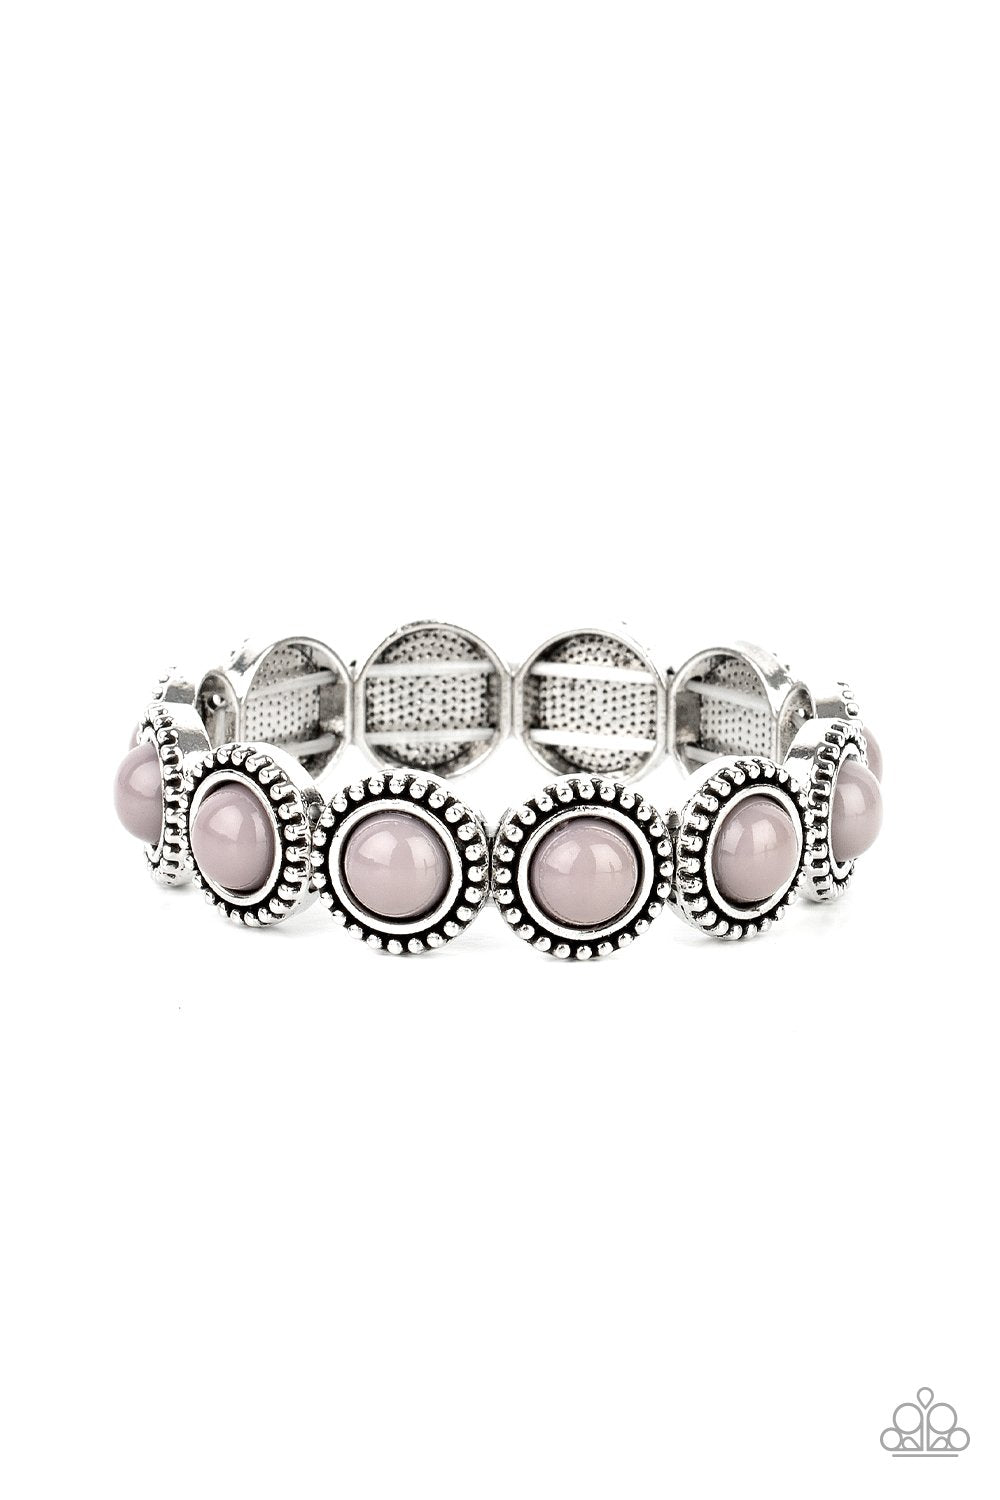 Polished Promenade Silver Bracelet - Paparazzi Accessories - lightbox -CarasShop.com - $5 Jewelry by Cara Jewels